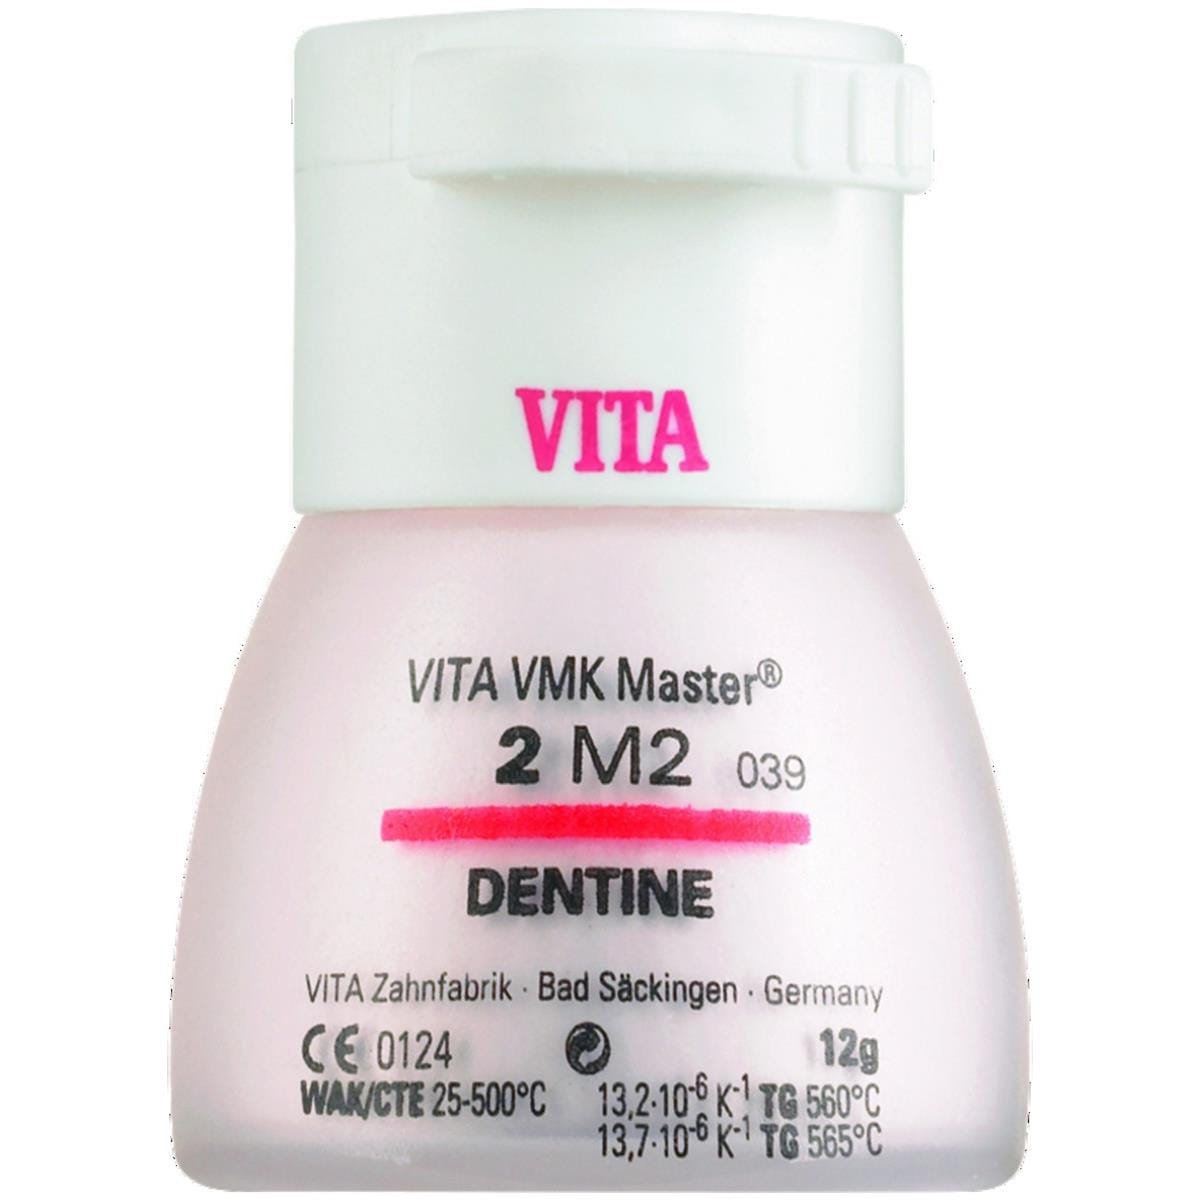 VMK Master VITA - Dentine - 4L1,5 - Le flacon de 12 g